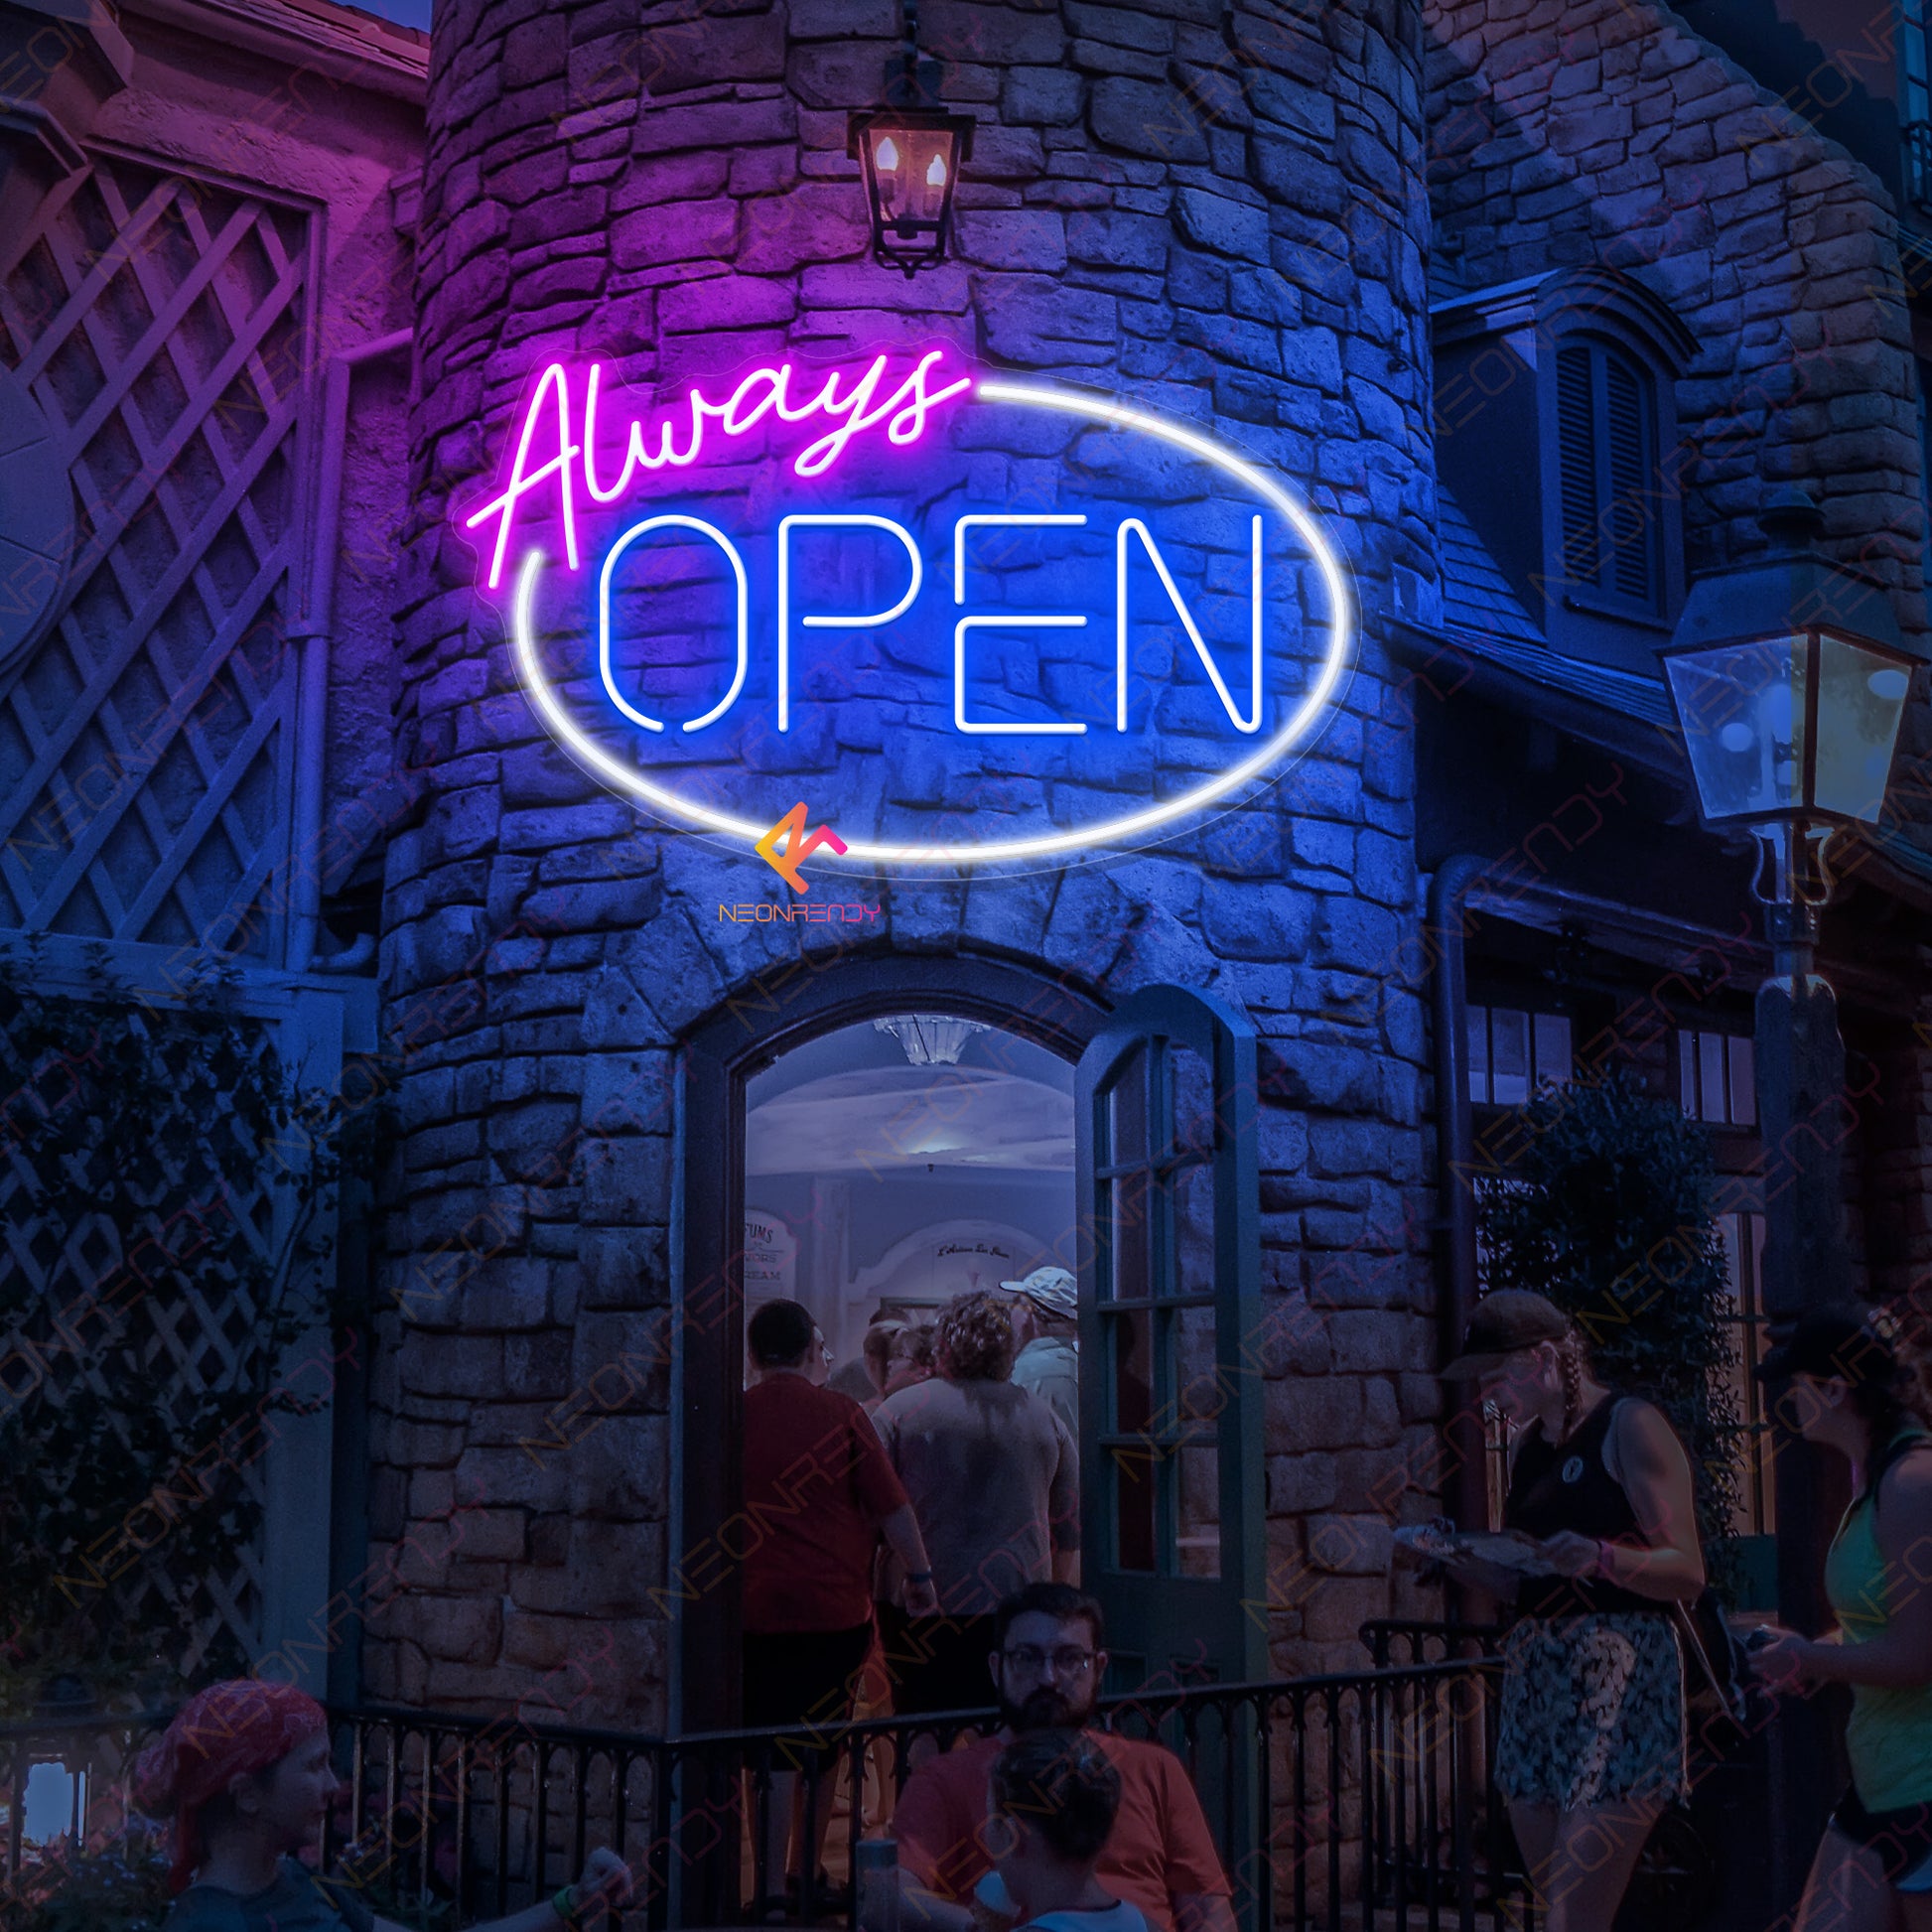 Always Open Neon Sign Business Decor Led Light blue